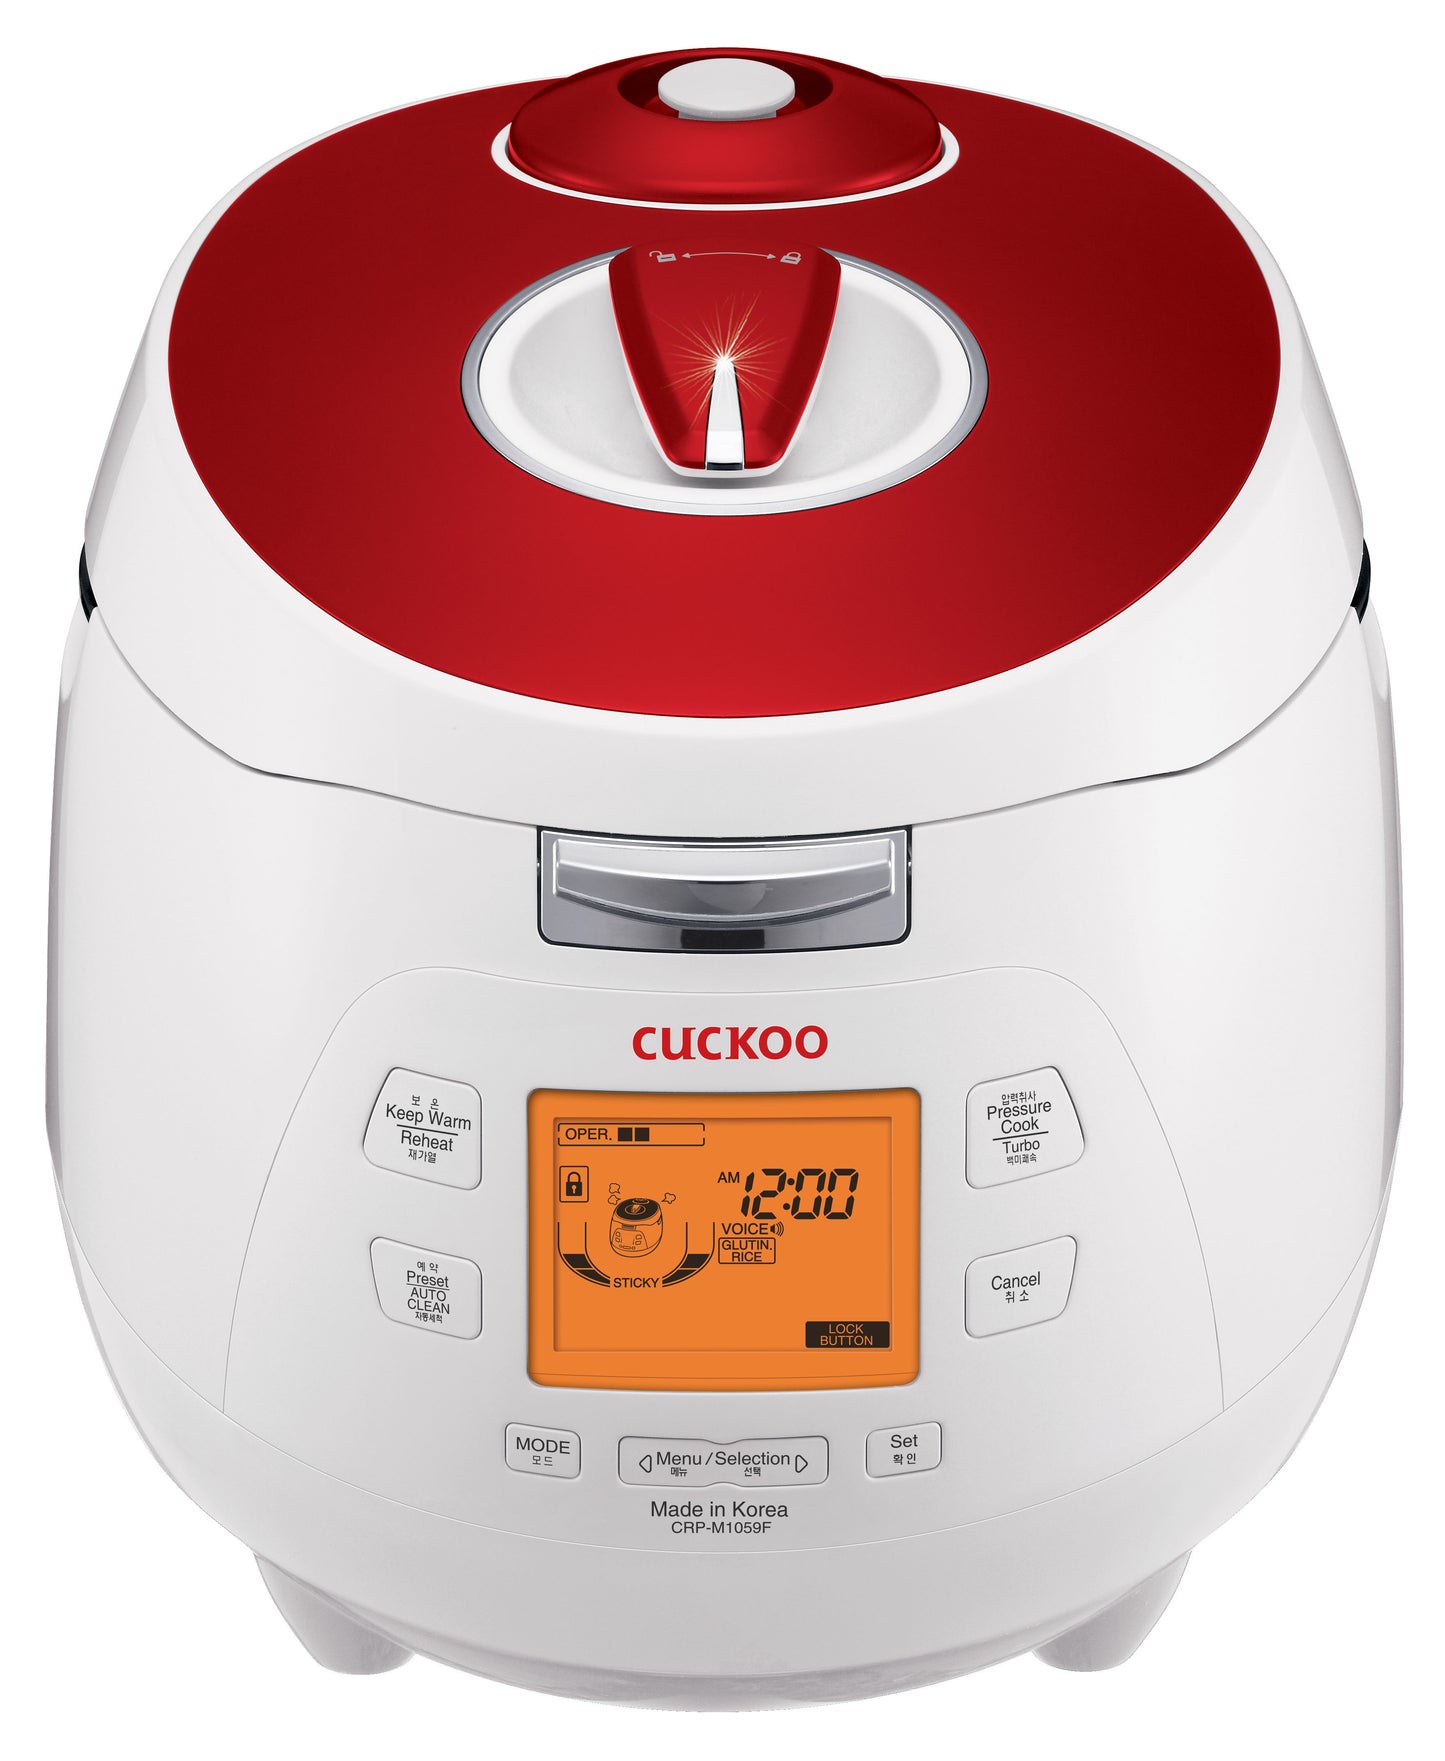 Cuckoo Electric Pressure Rice Cooker (CRP-M1059F) 10 Cups